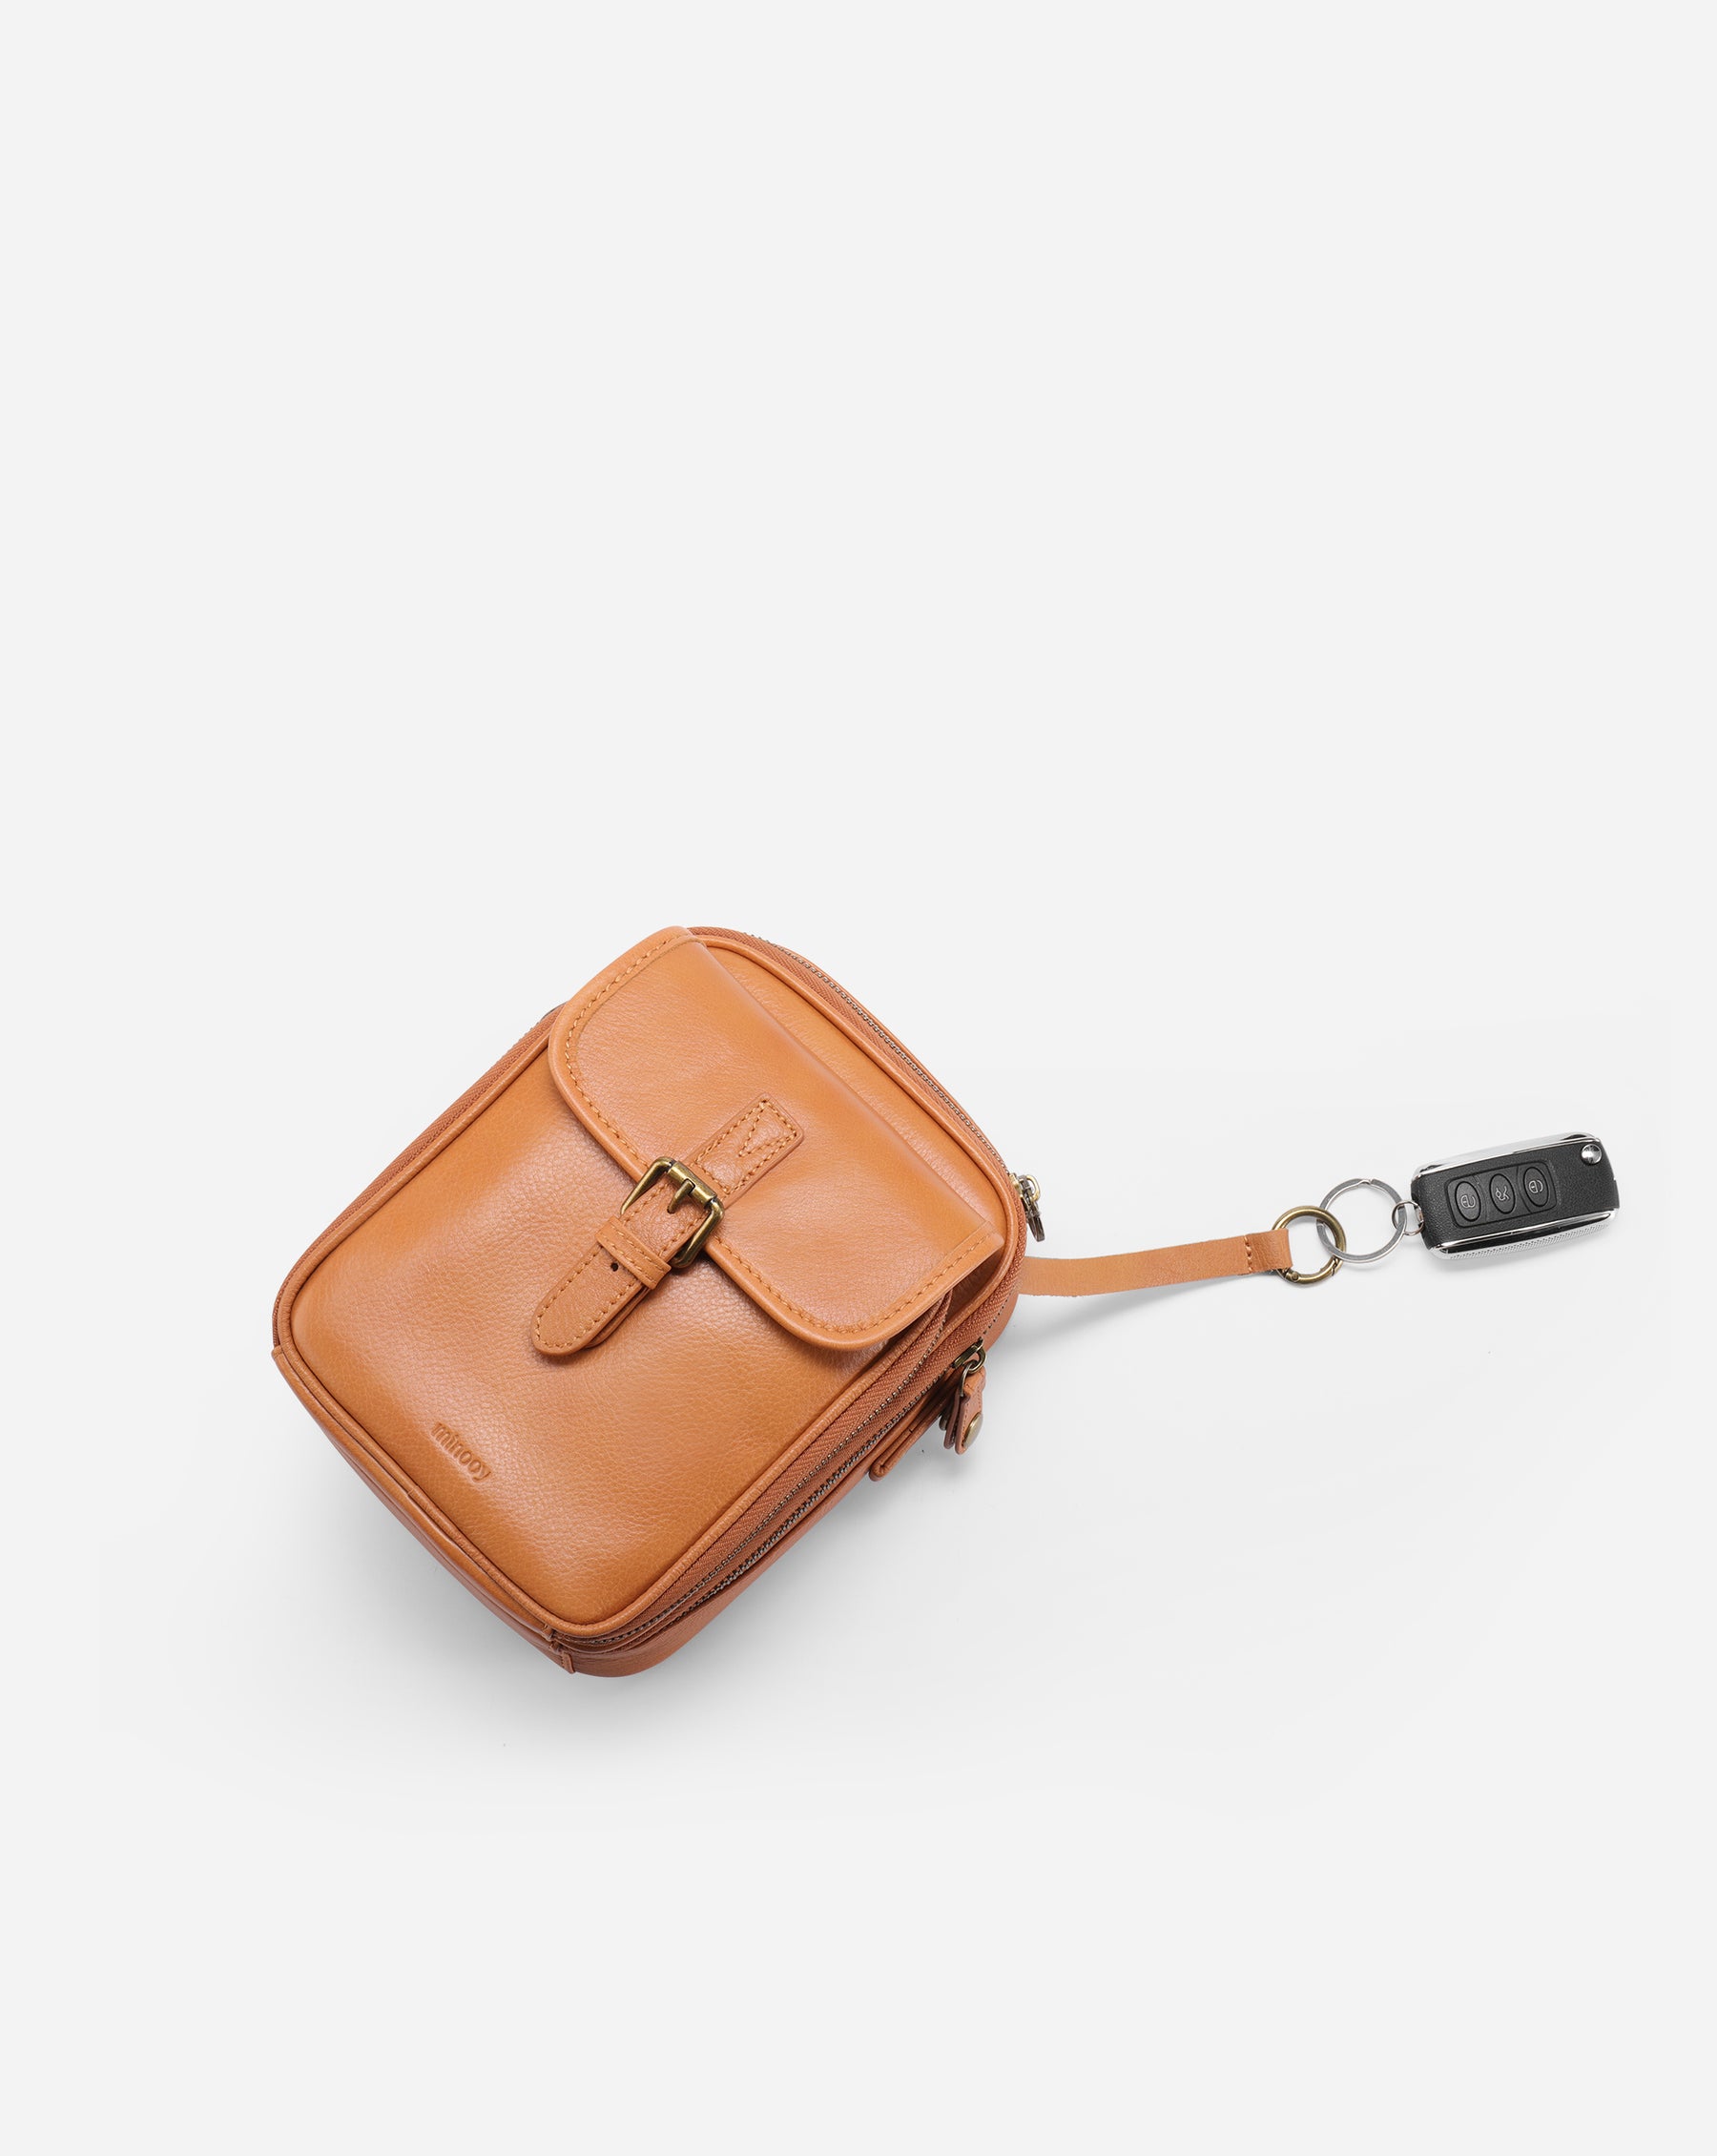 Small Black Leather Crossbody Handbags